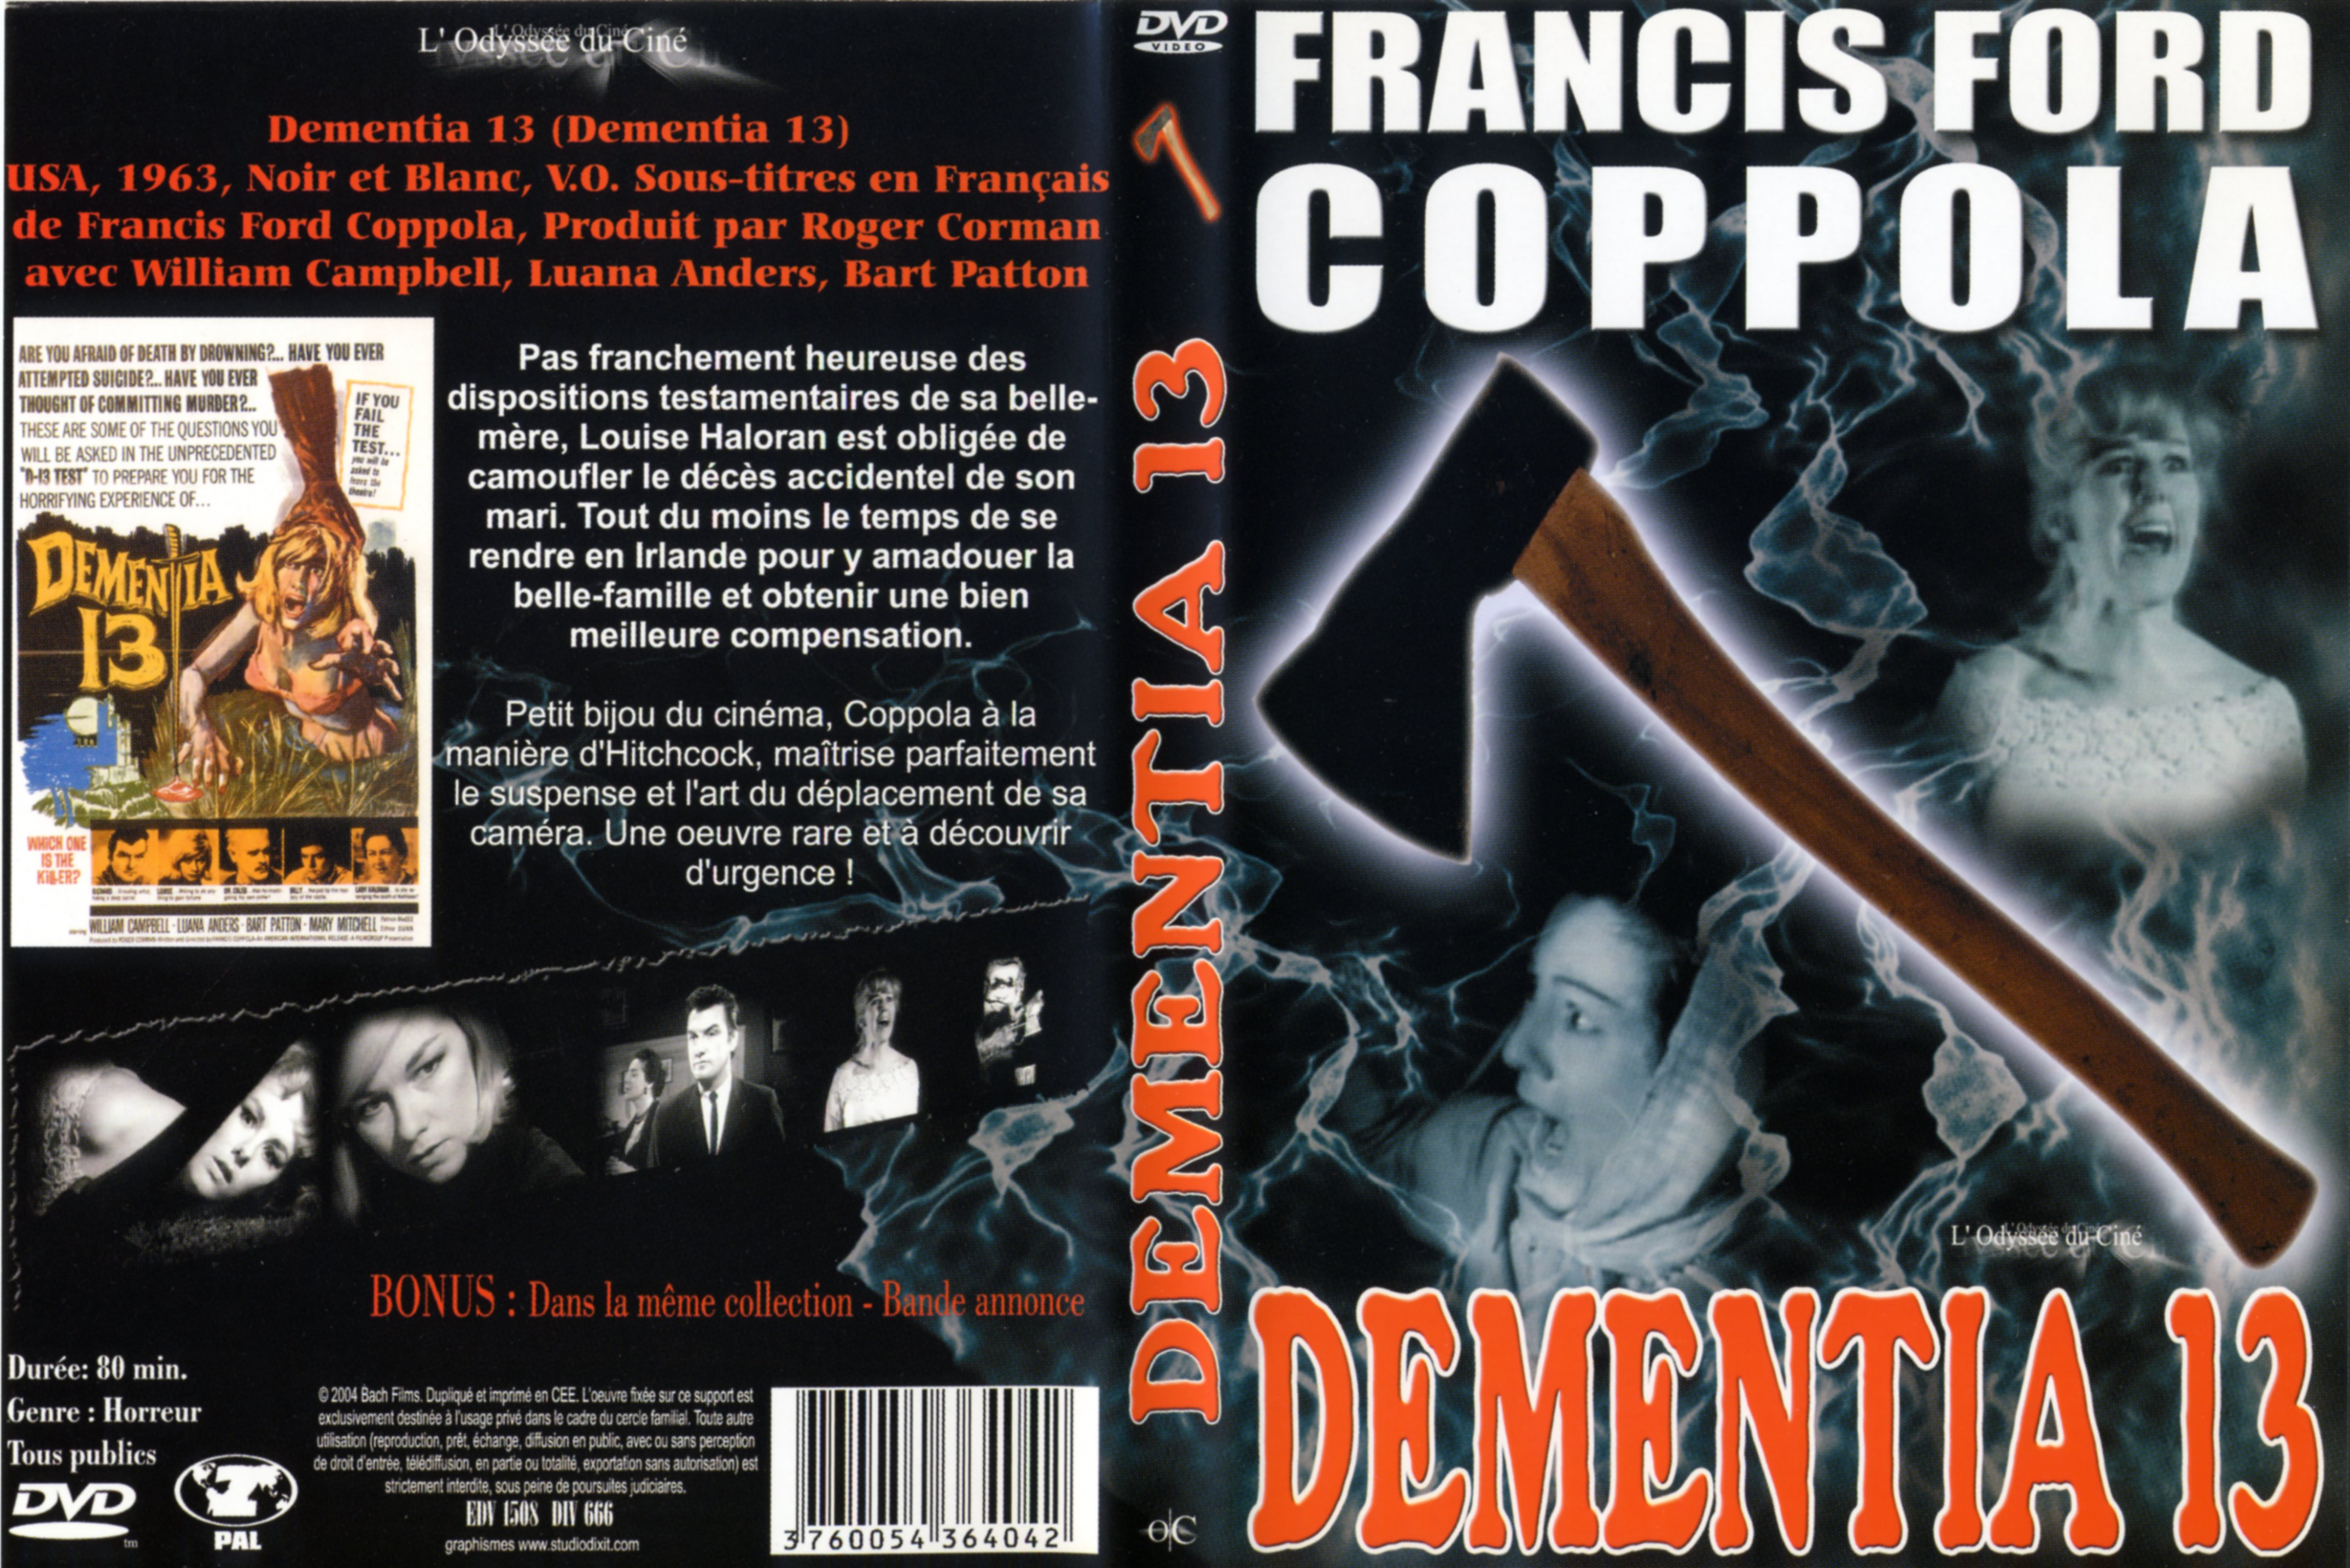 Jaquette DVD Dementia 13 v2